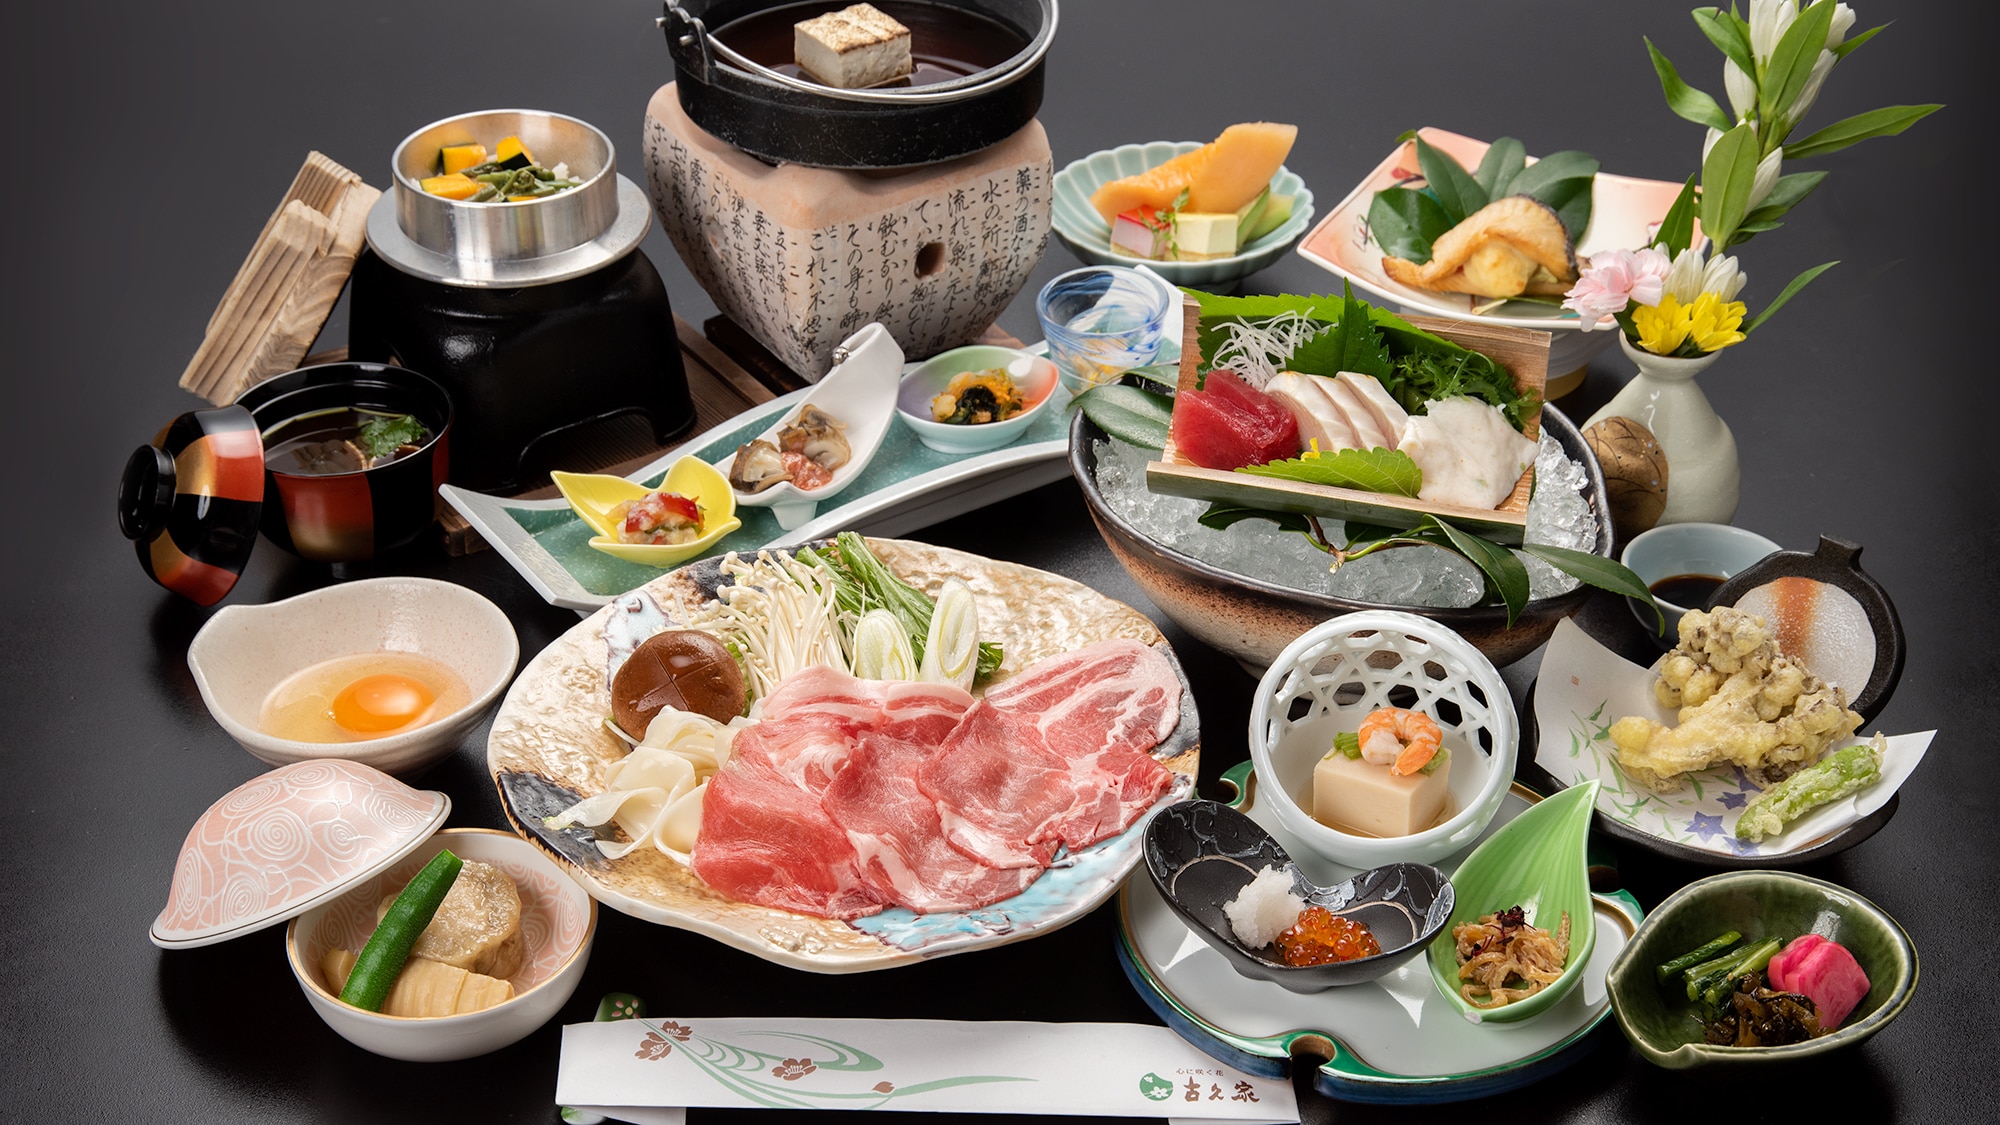 * [Supper example] Japanese pork mochibuta sukiyaki is popular.